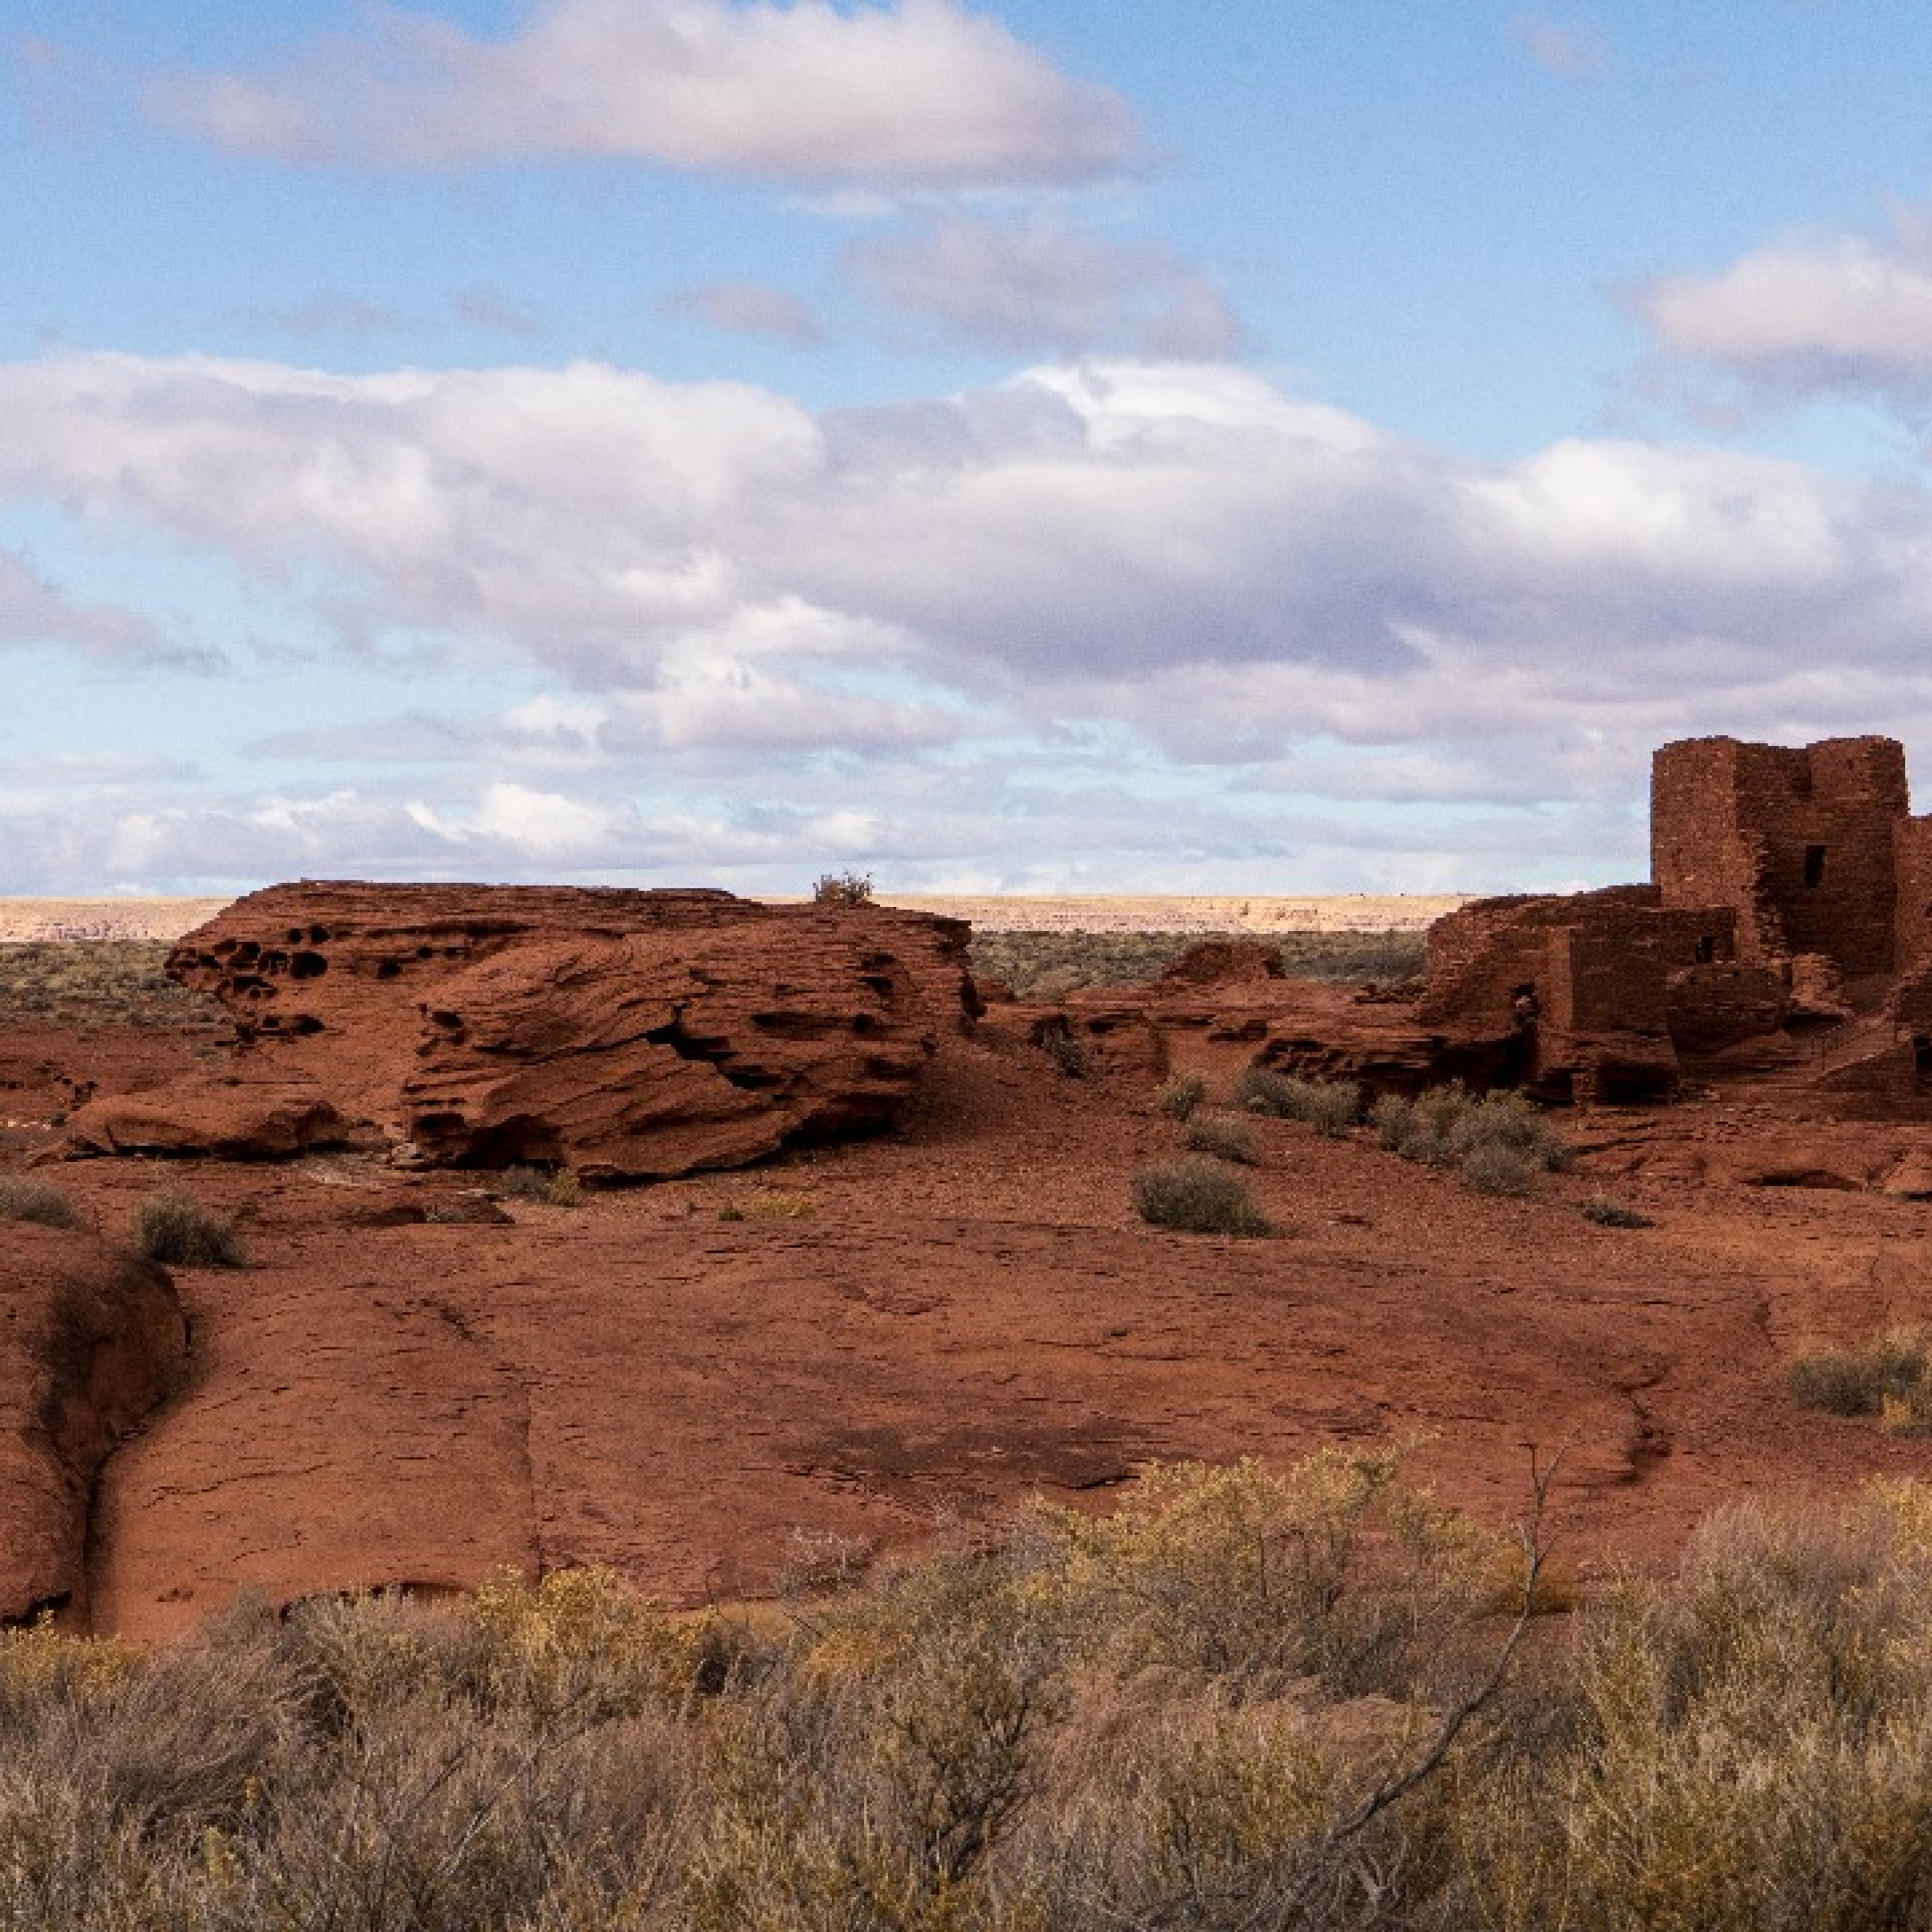 Wupatki Pueblo on a rock hill. Wupatki is in the desert of Arizona made with thin brown-reddish thin flat bricks.